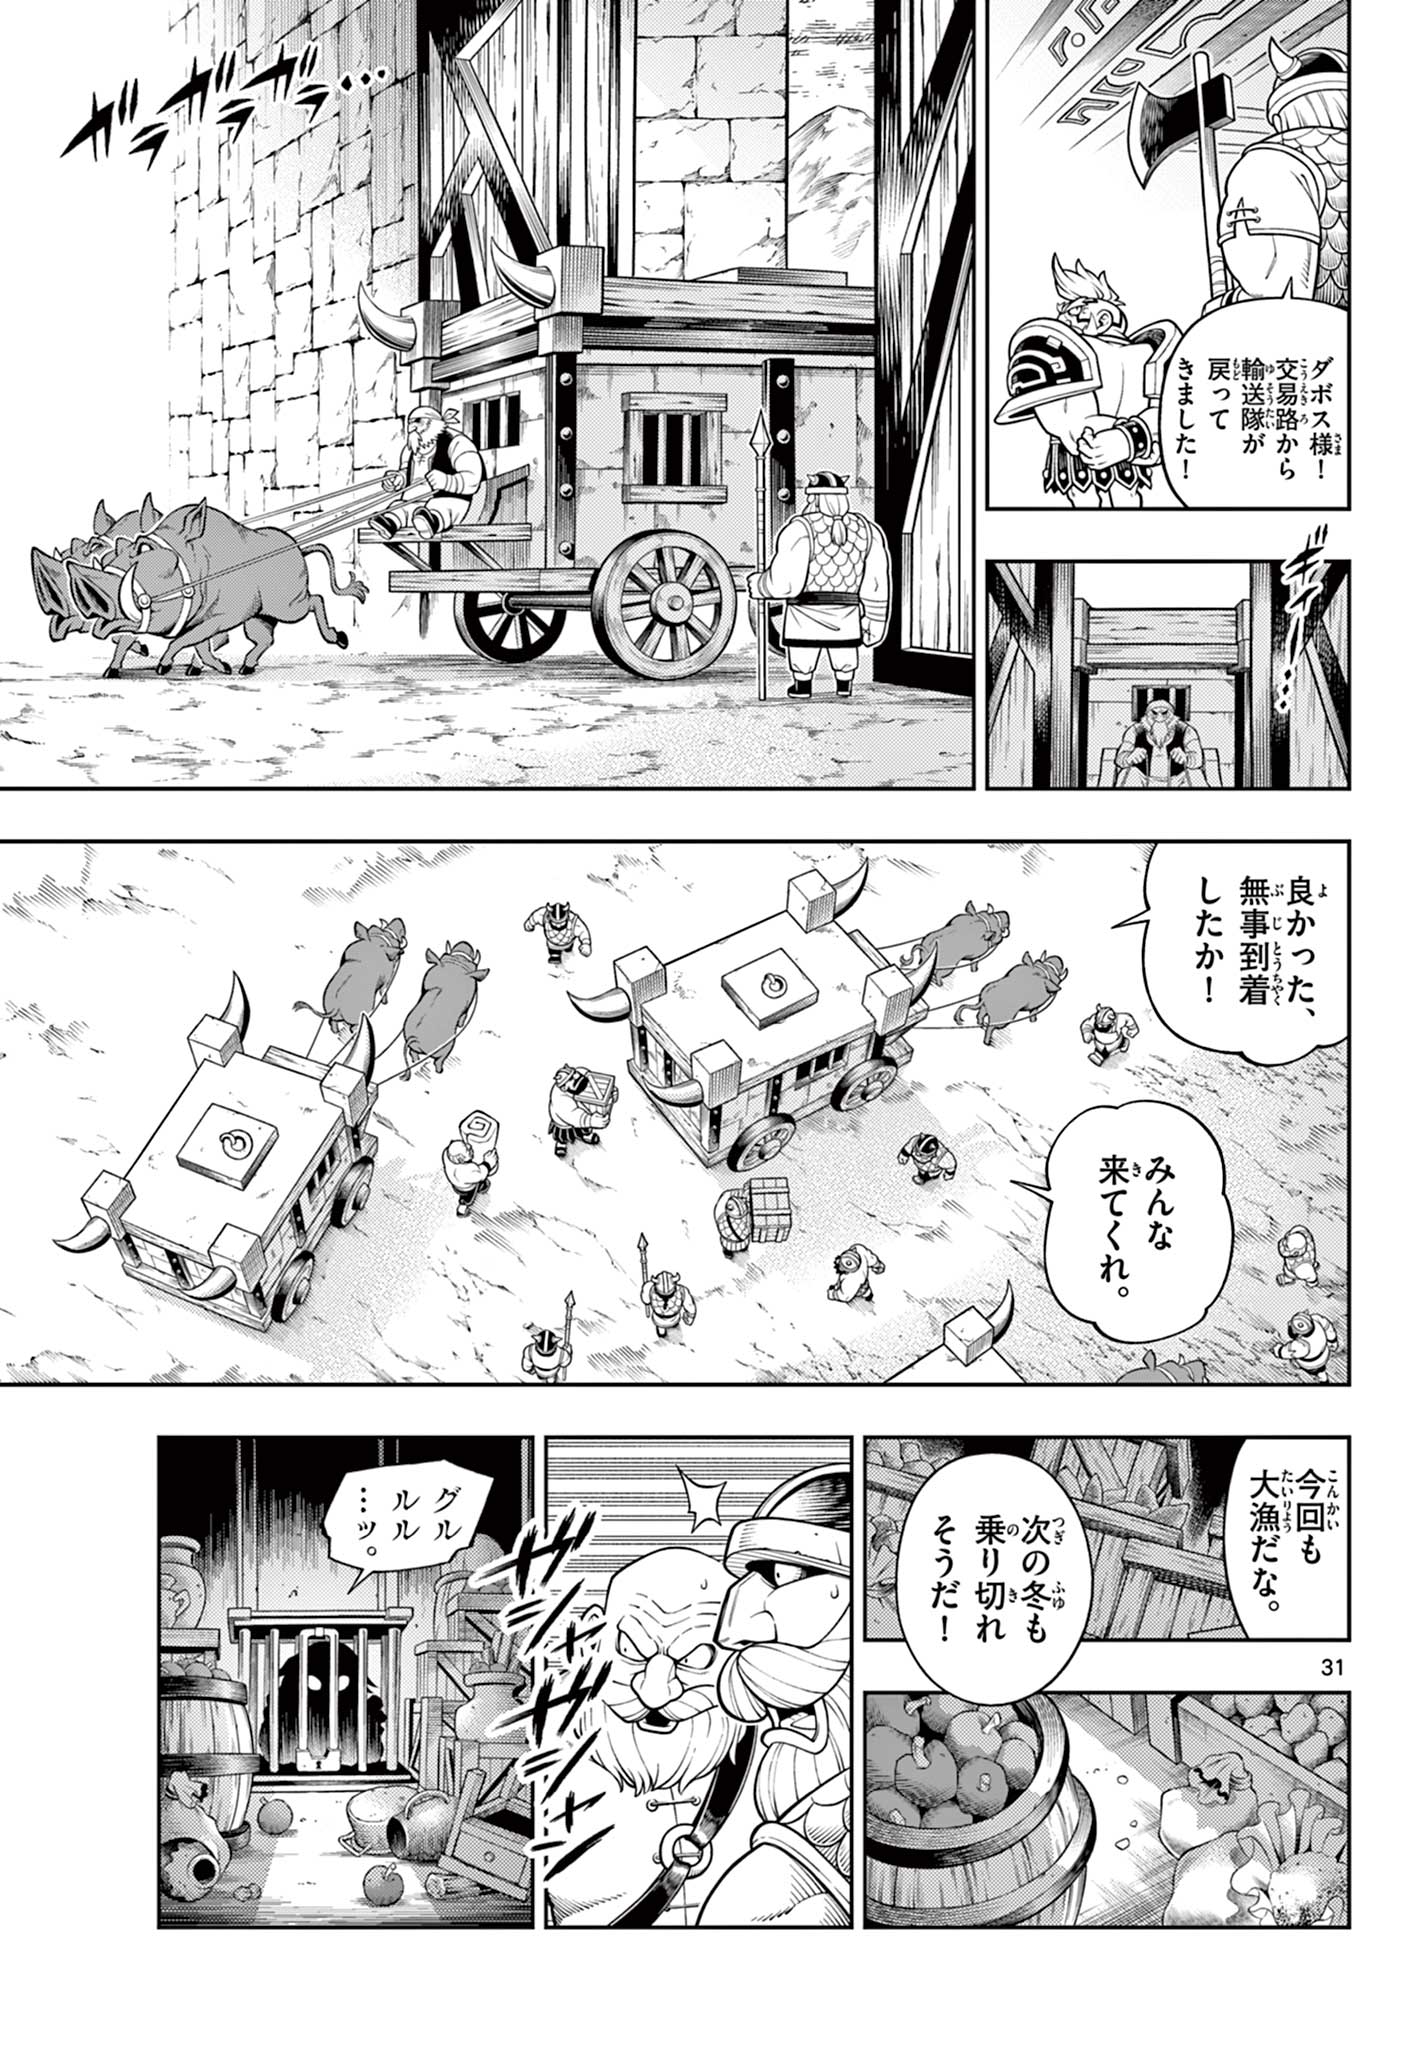 Soara to Mamono no ie - Chapter 24 - Page 31